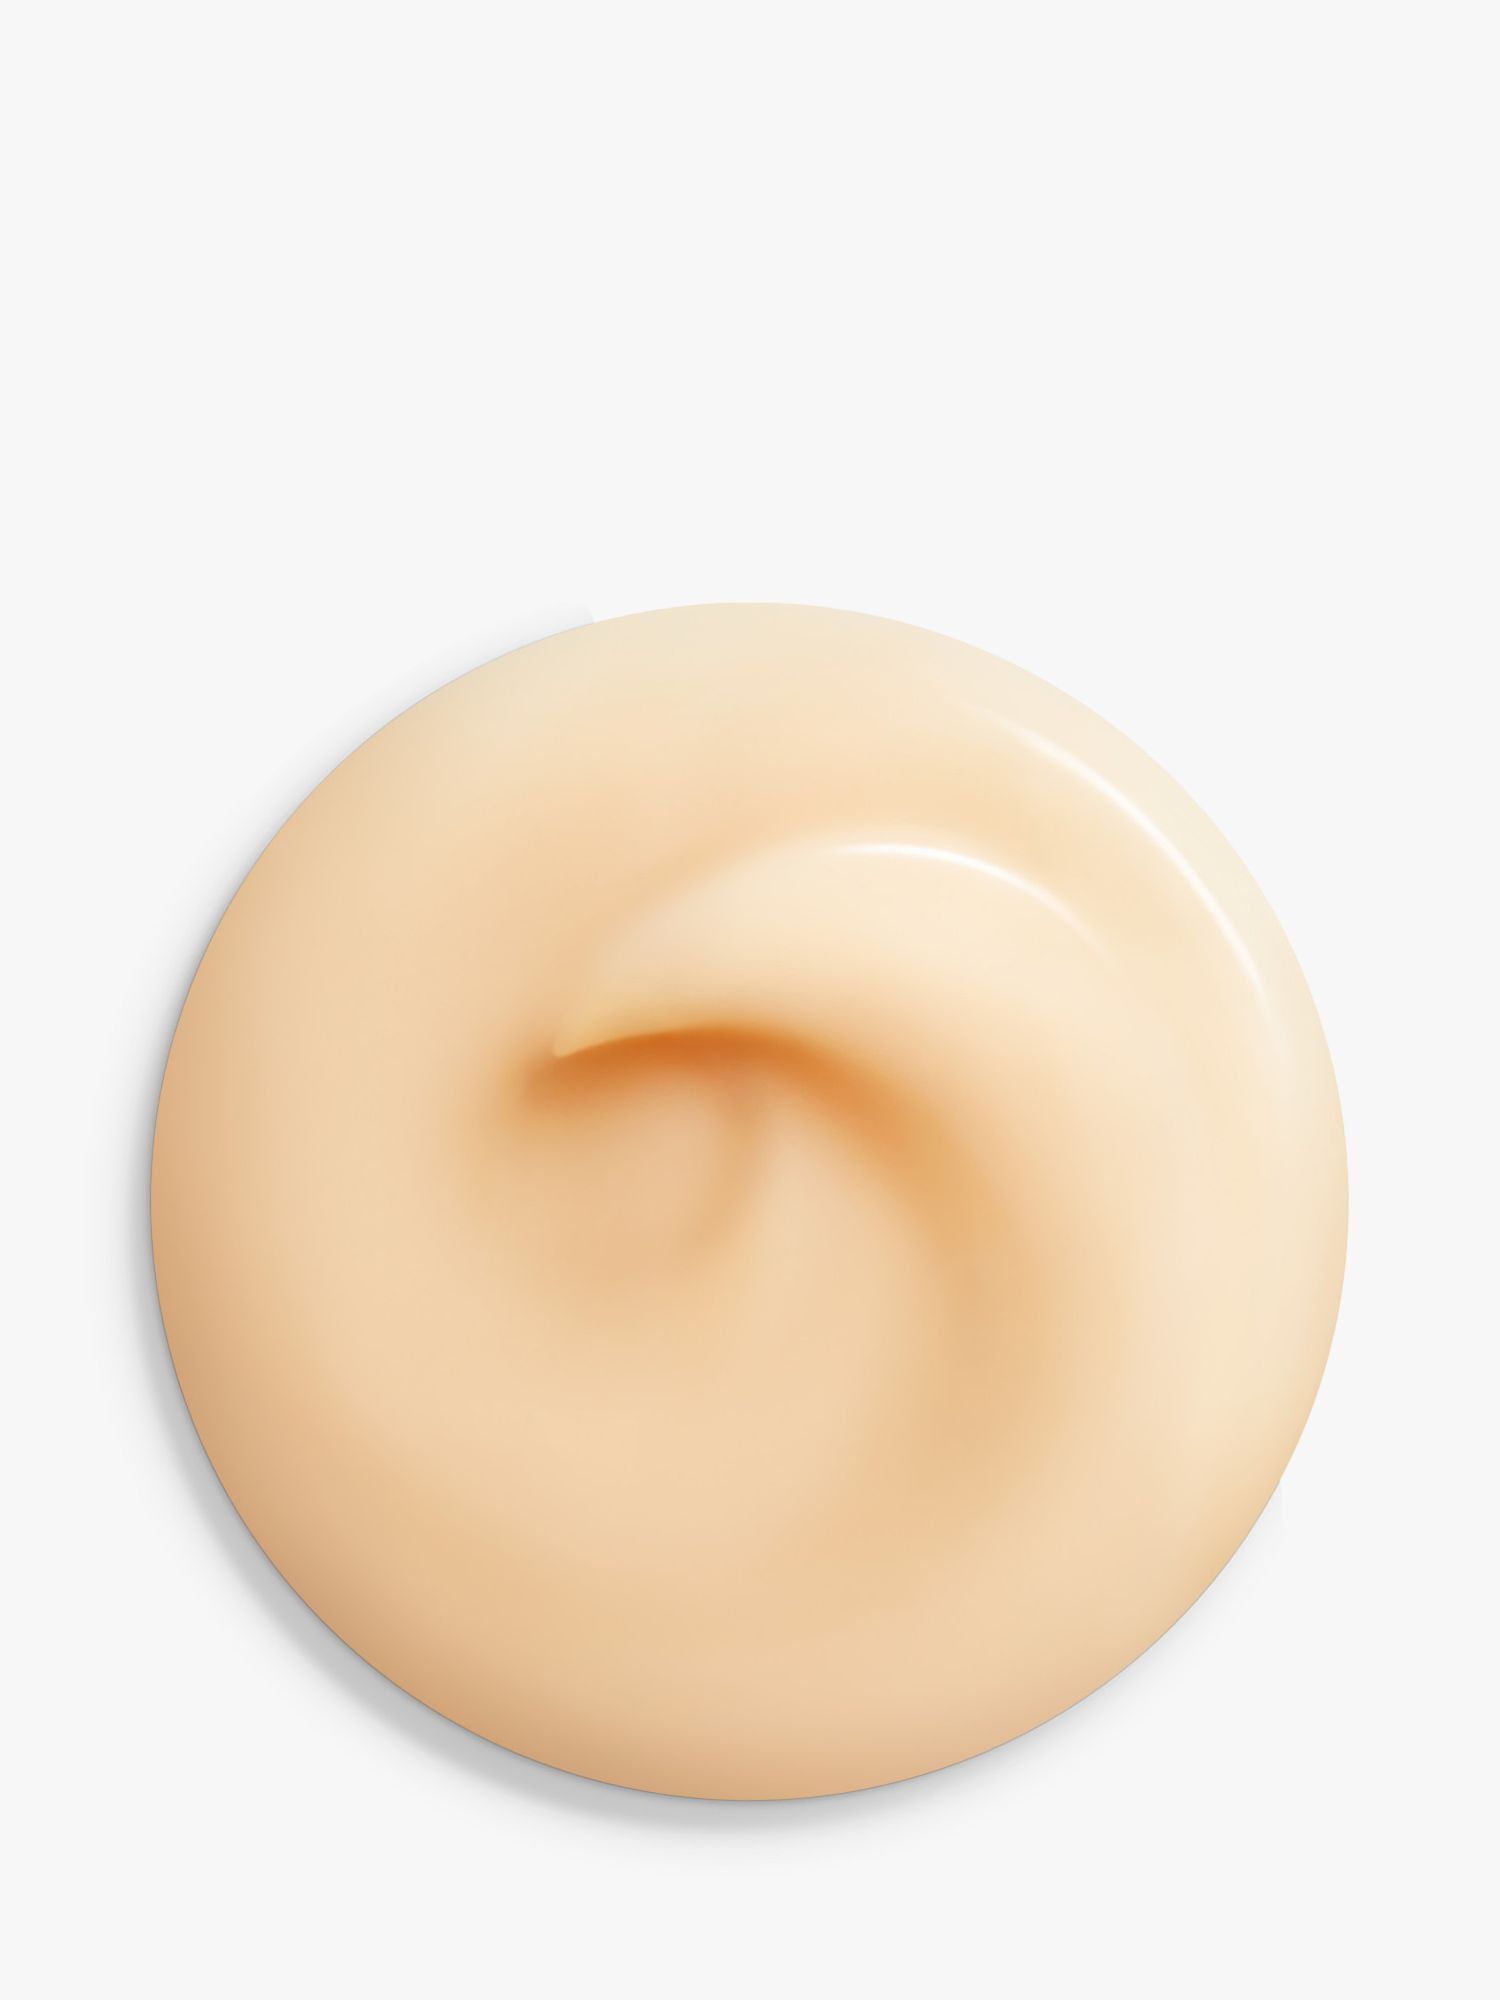 Shiseido Benefiance Overnight Wrinkle Resisting Cream, 50ml 2